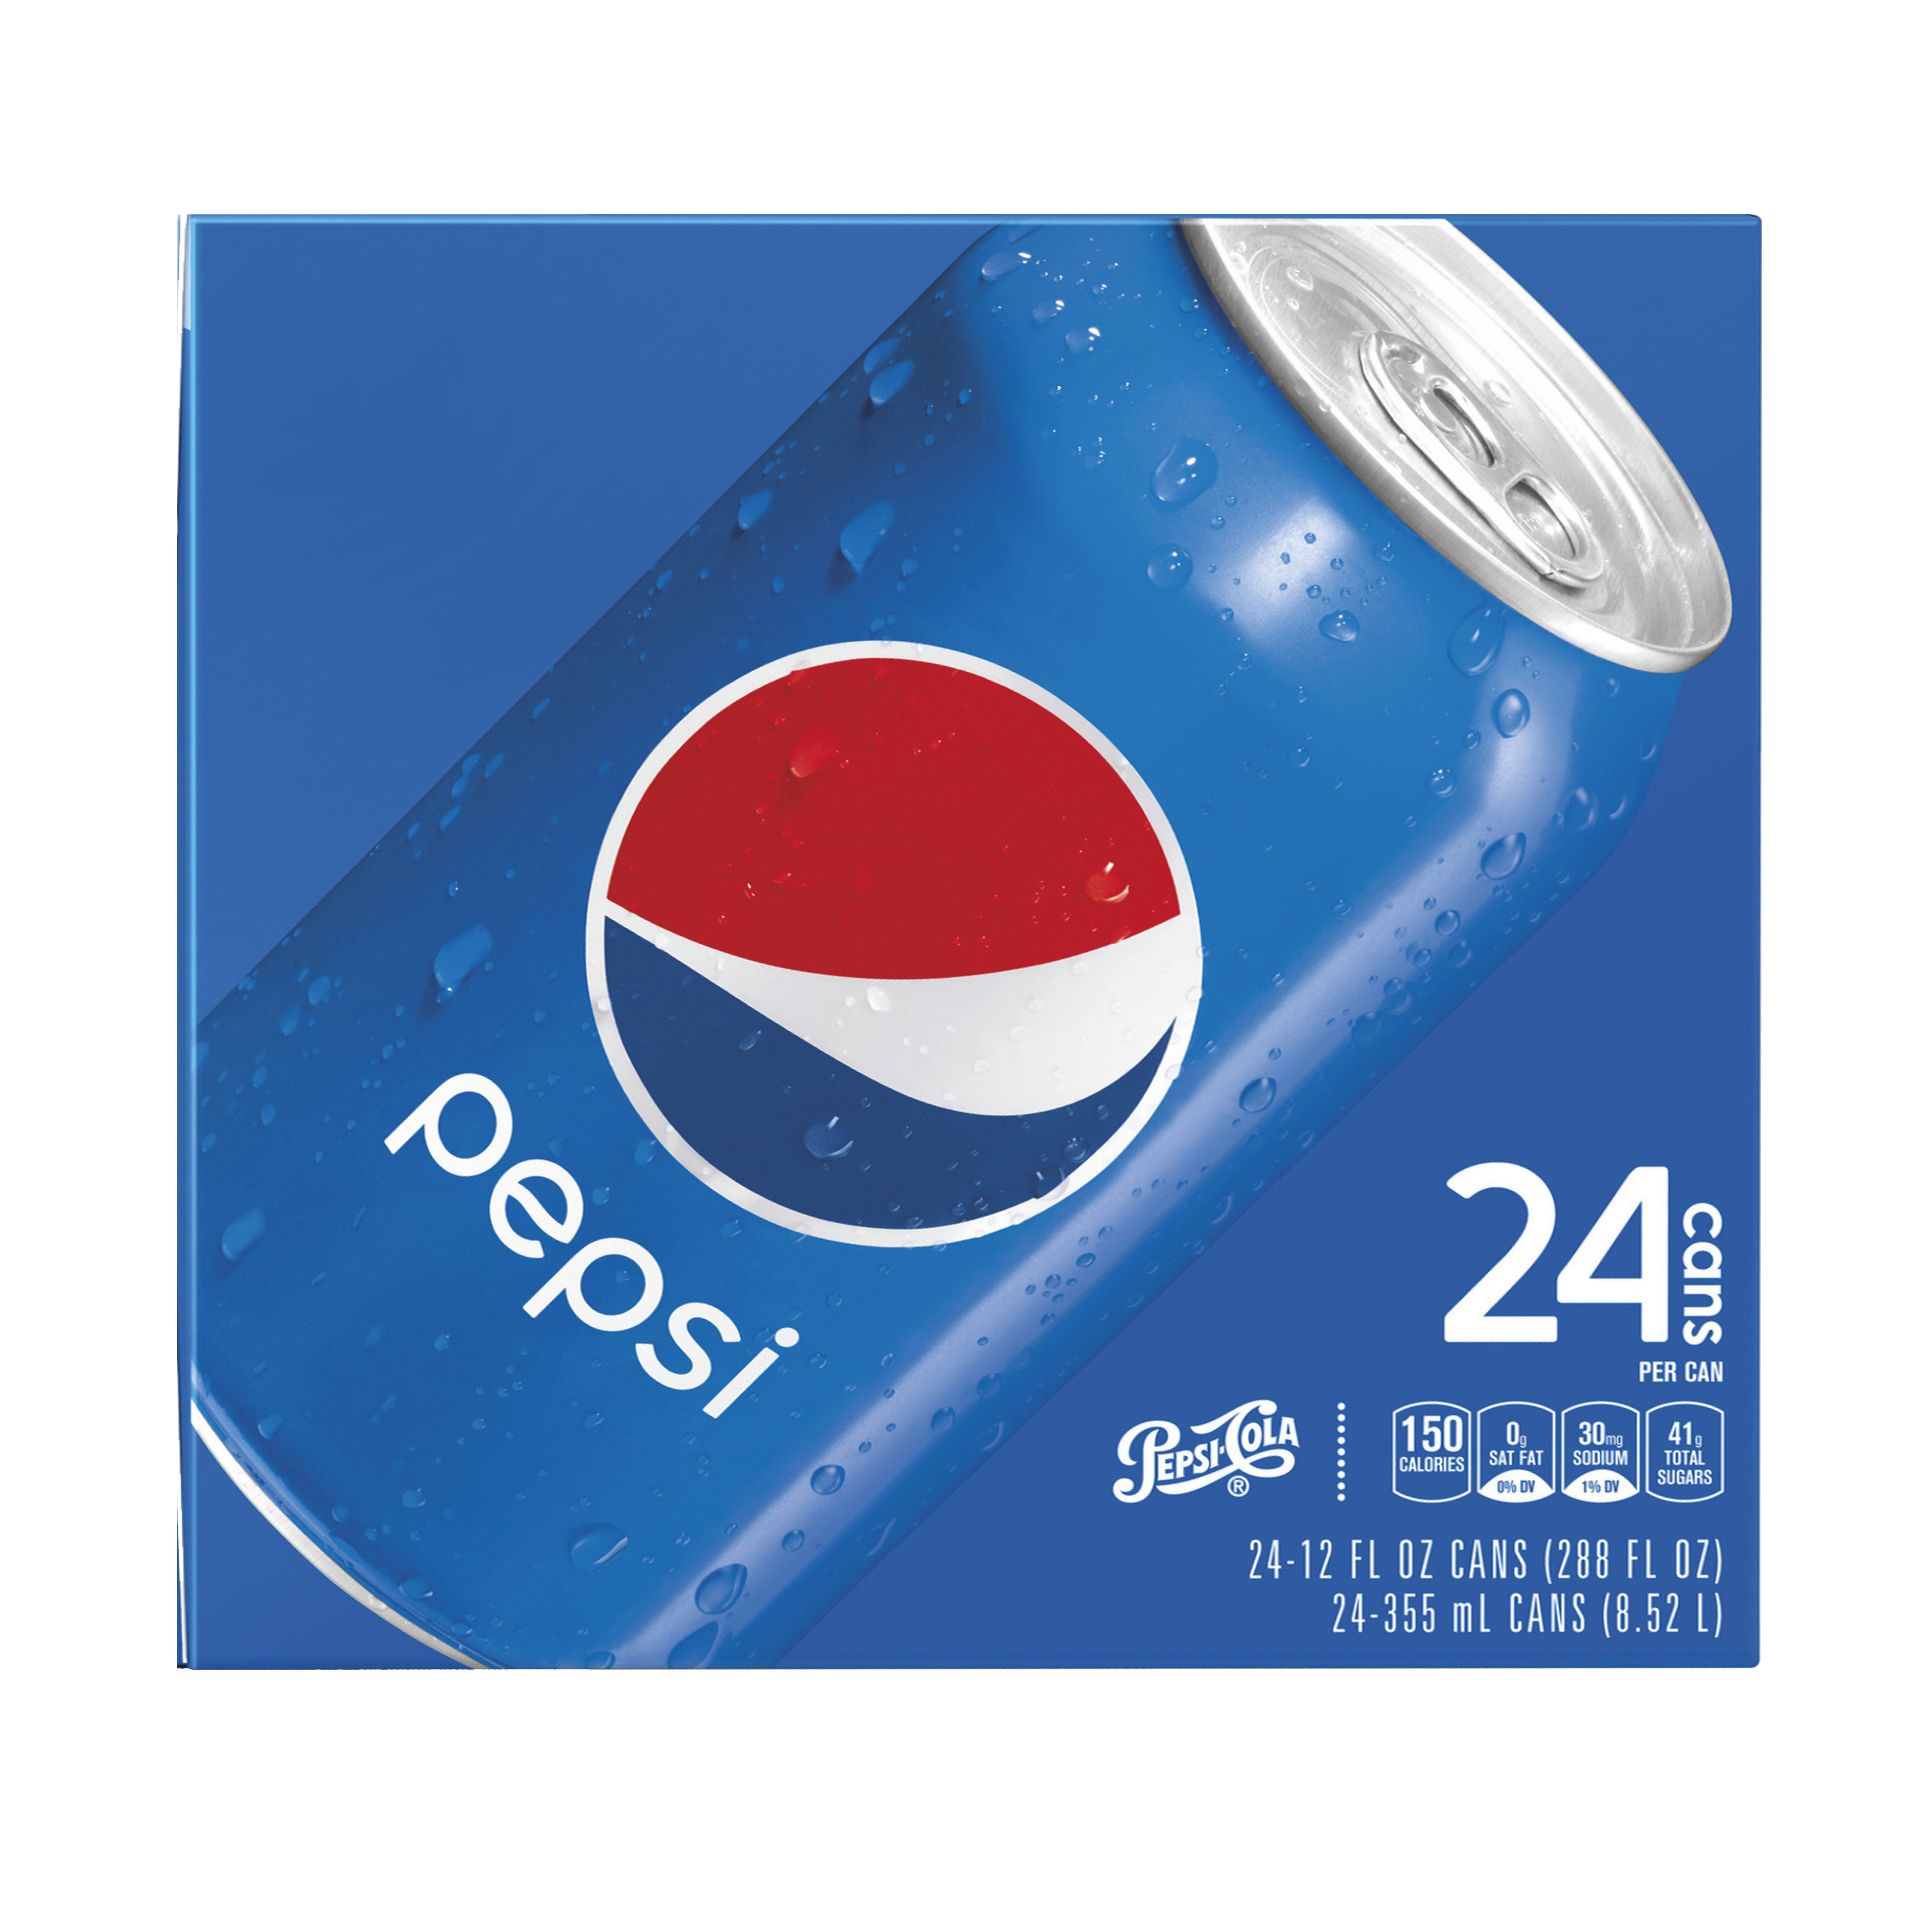 Pepsi Soda 24 pk./12 oz. cans